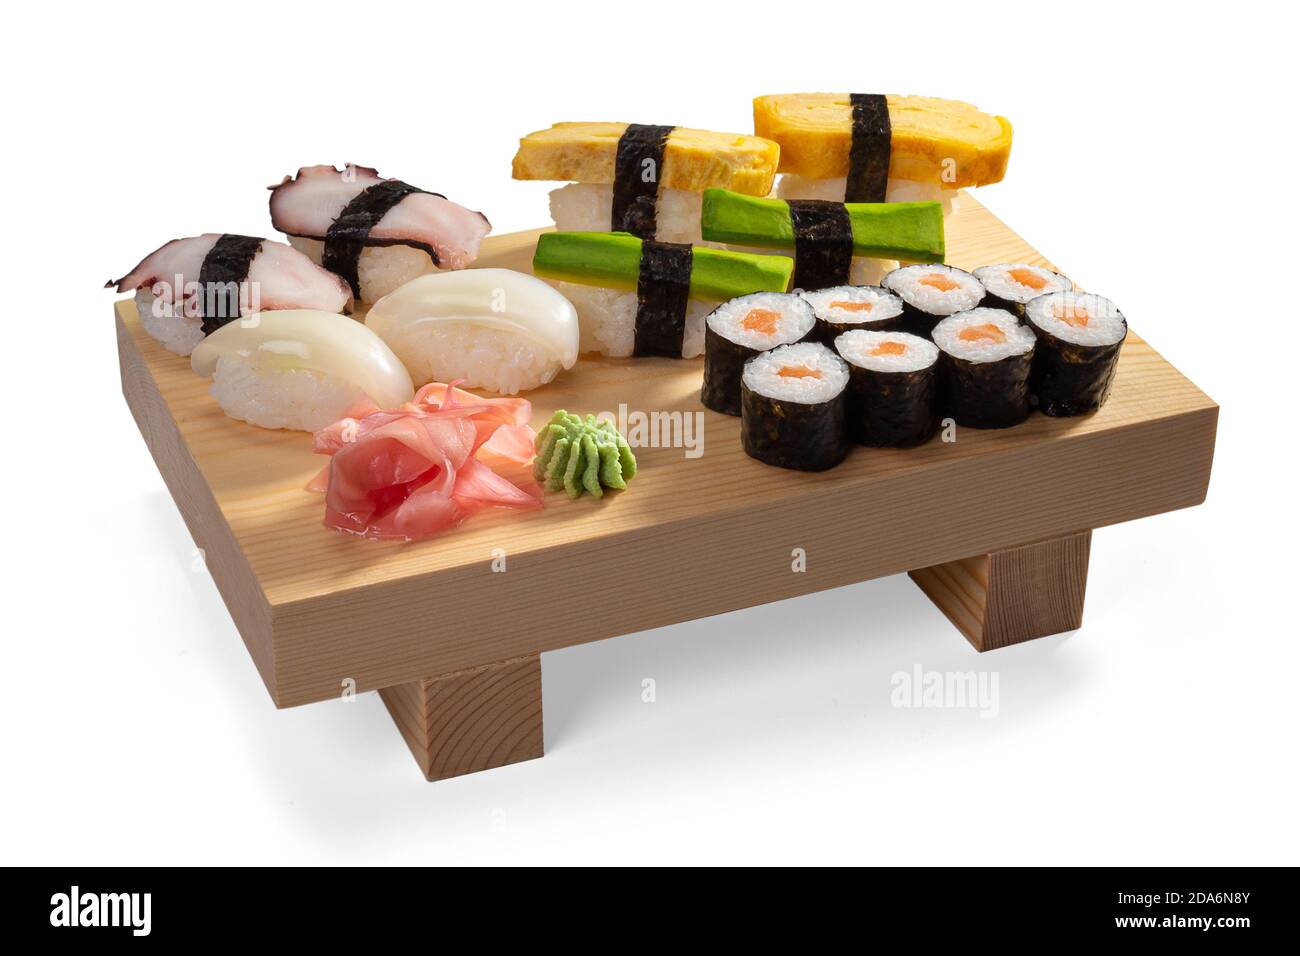 https://c8.alamy.com/comp/2DA6N8Y/sushi-set-and-sushi-rolls-on-a-wooden-board-isolated-on-white-background-2DA6N8Y.jpg